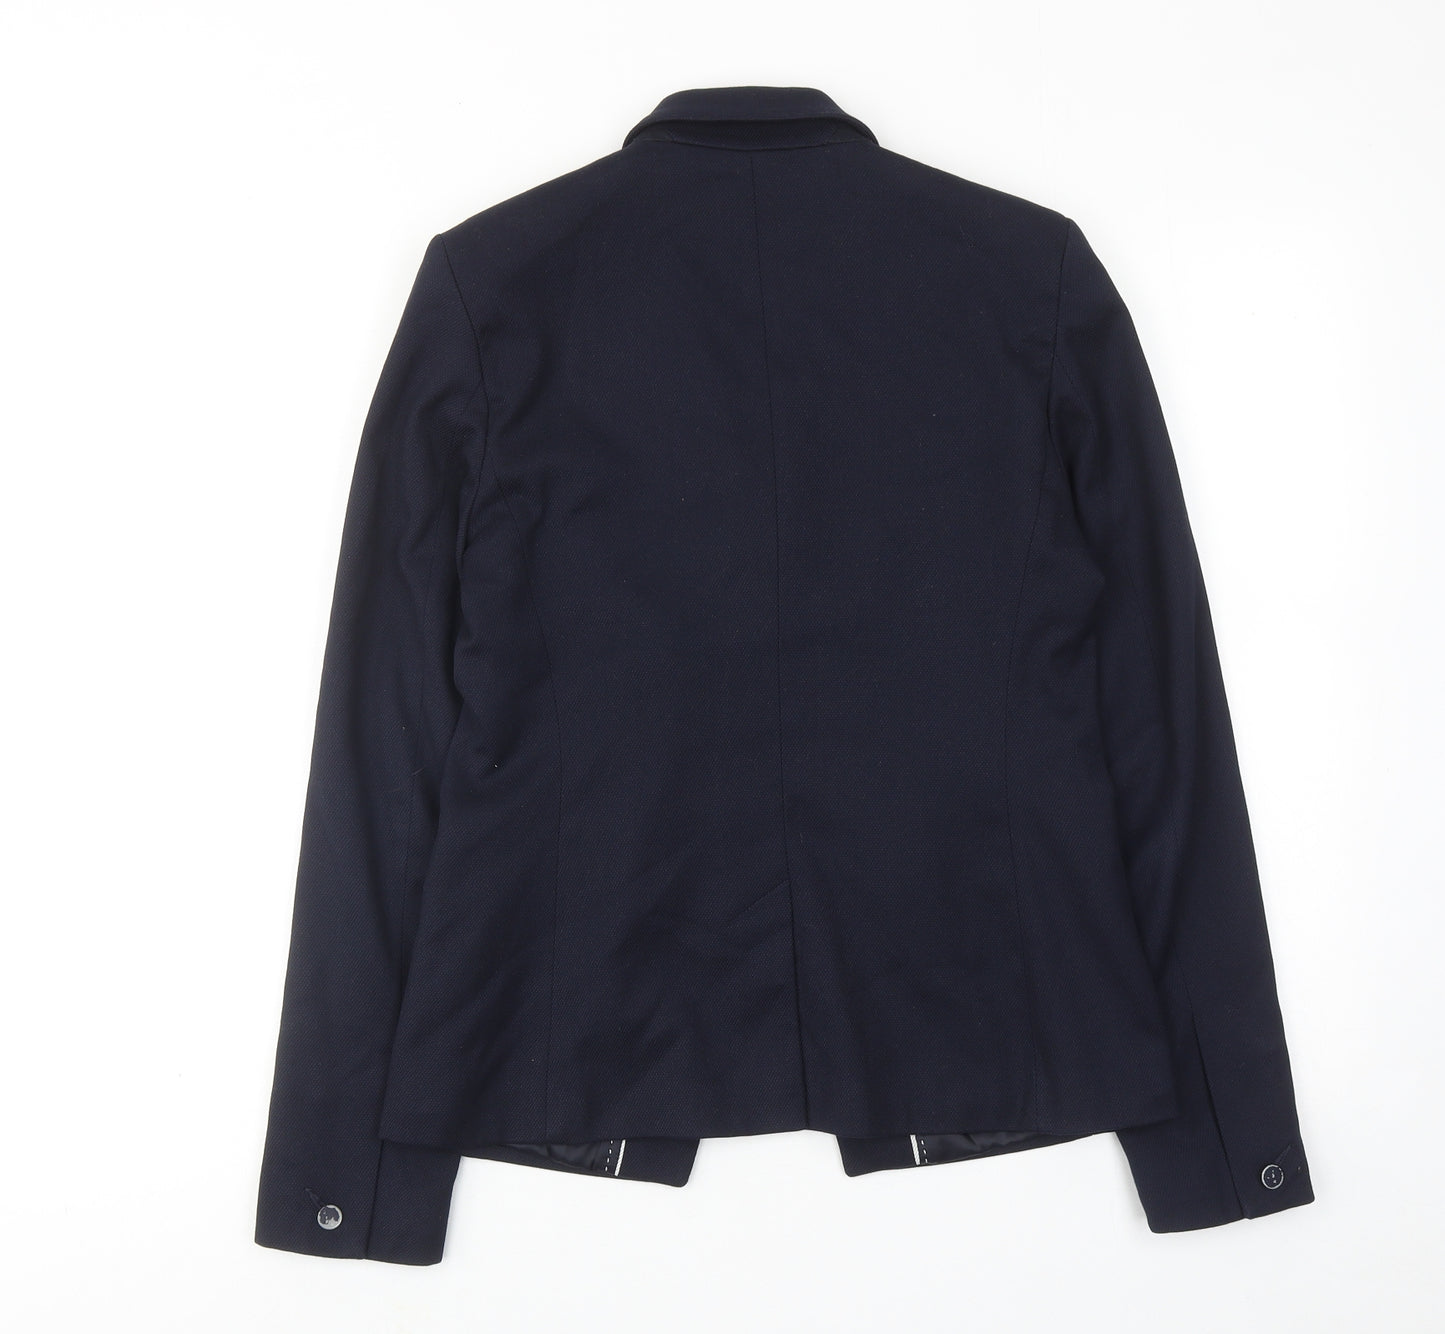 NEXT Womens Blue Polyester Jacket Suit Jacket Size 10